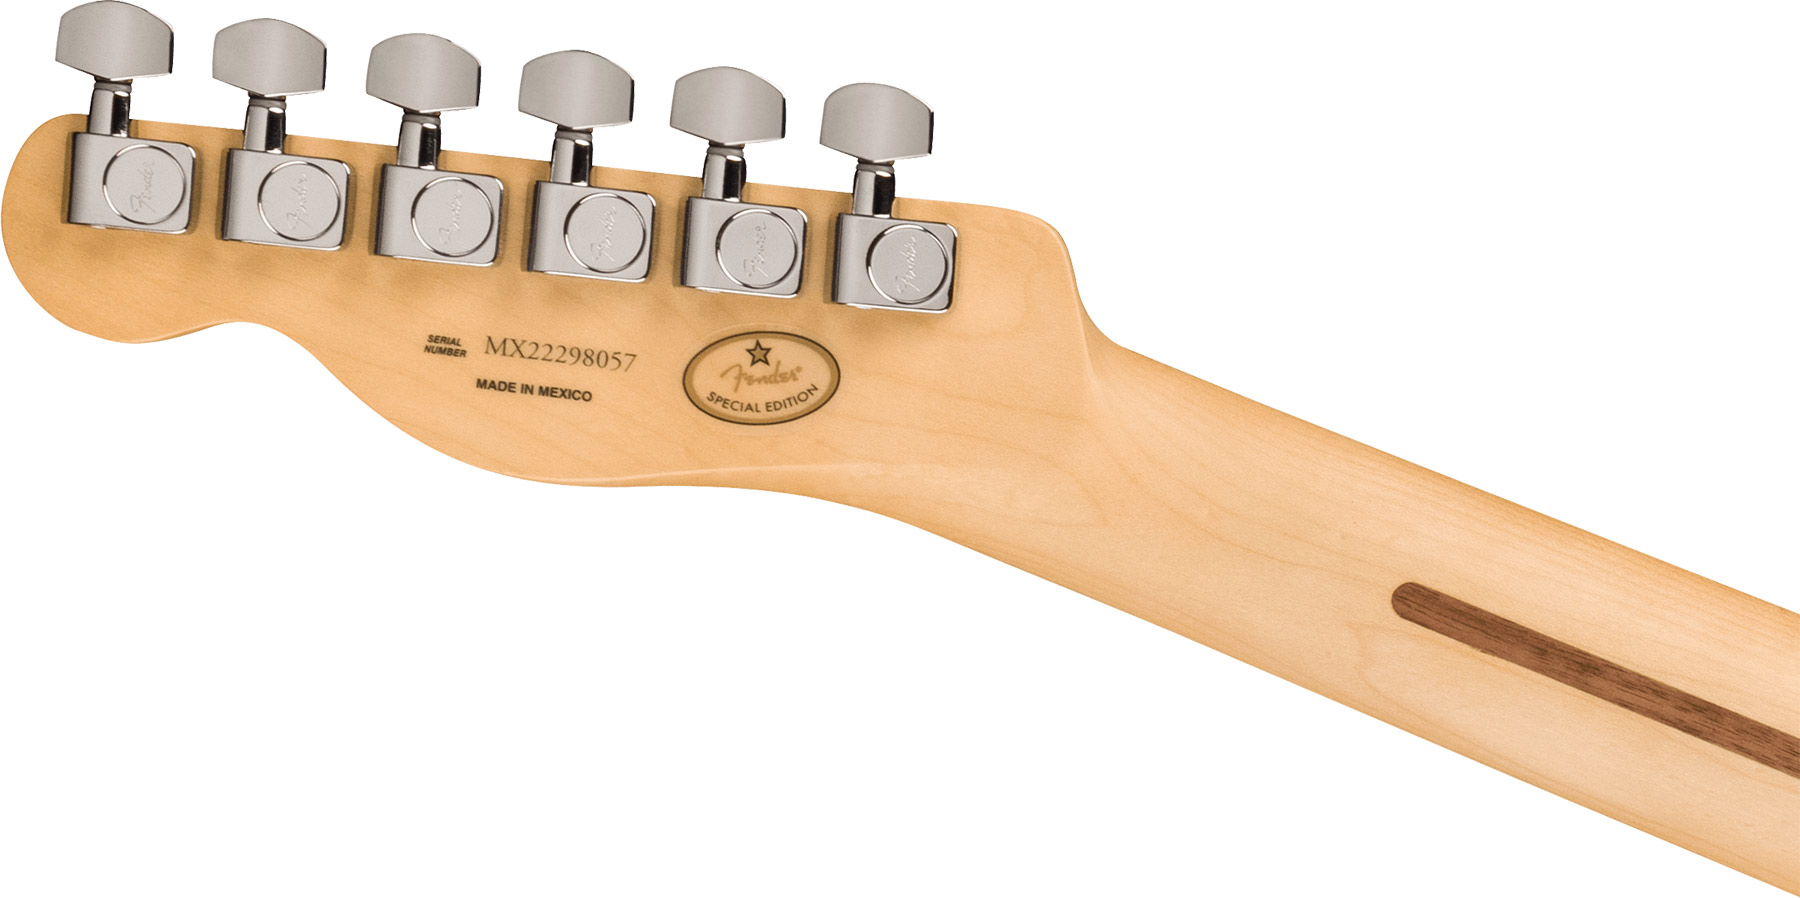 Fender Tele Player Ltd Mex 2s Seymour Duncan Mn - British Racing Green - Tel shape electric guitar - Variation 3